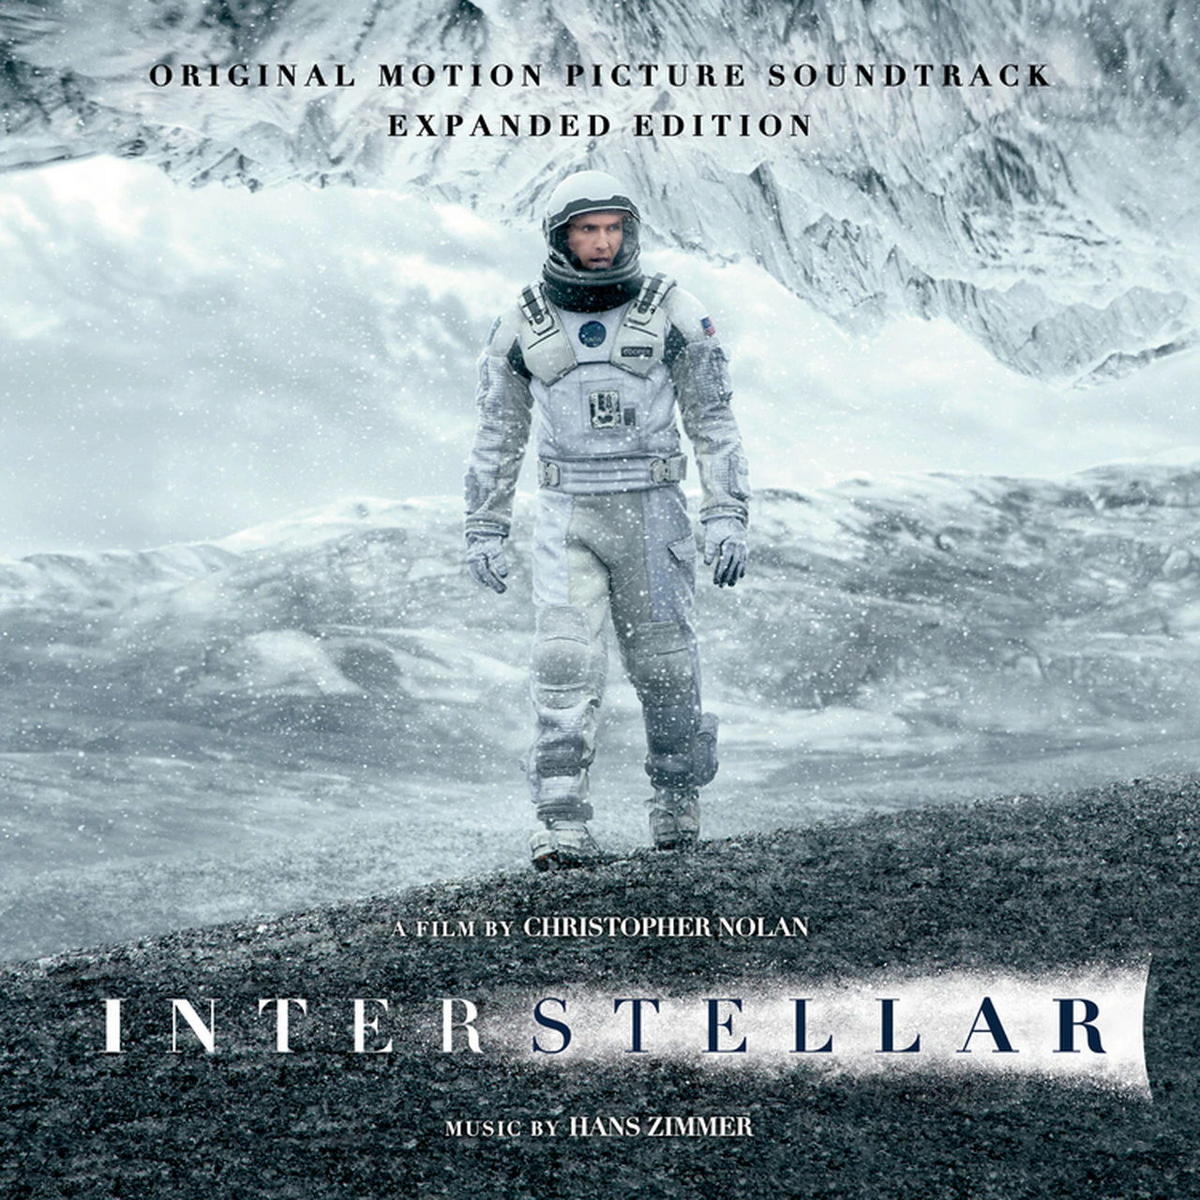 Саундтрек Sony Hans Zimmer - Interstellar (Original Motion Picture Soundtrack) (4LP/Expanded Edition) джаз sony seatbelts cowboy bebop original series soundtrack